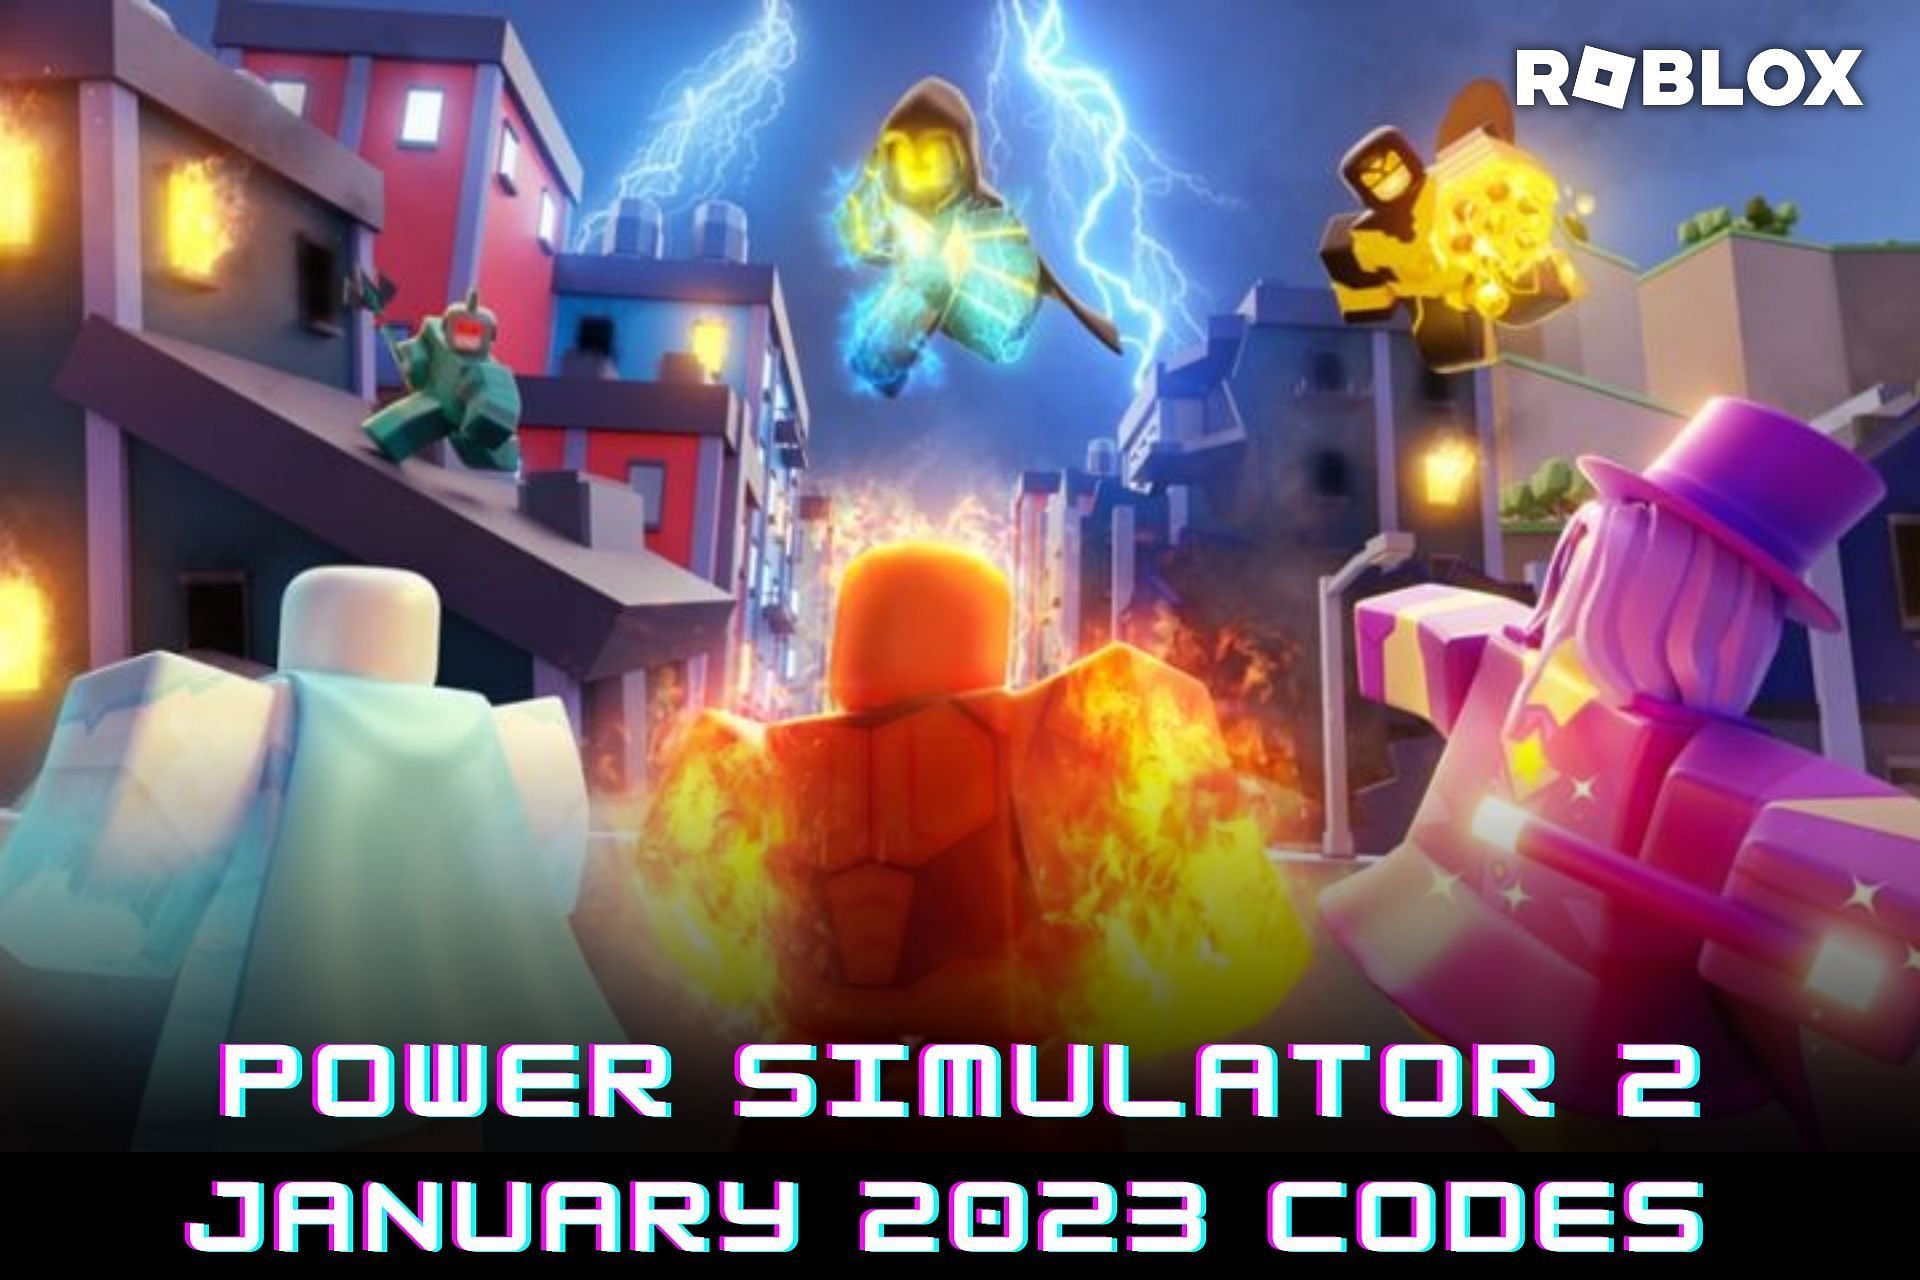 Roblox - All Star Tower Defense - Promo Codes Janeiro 2022